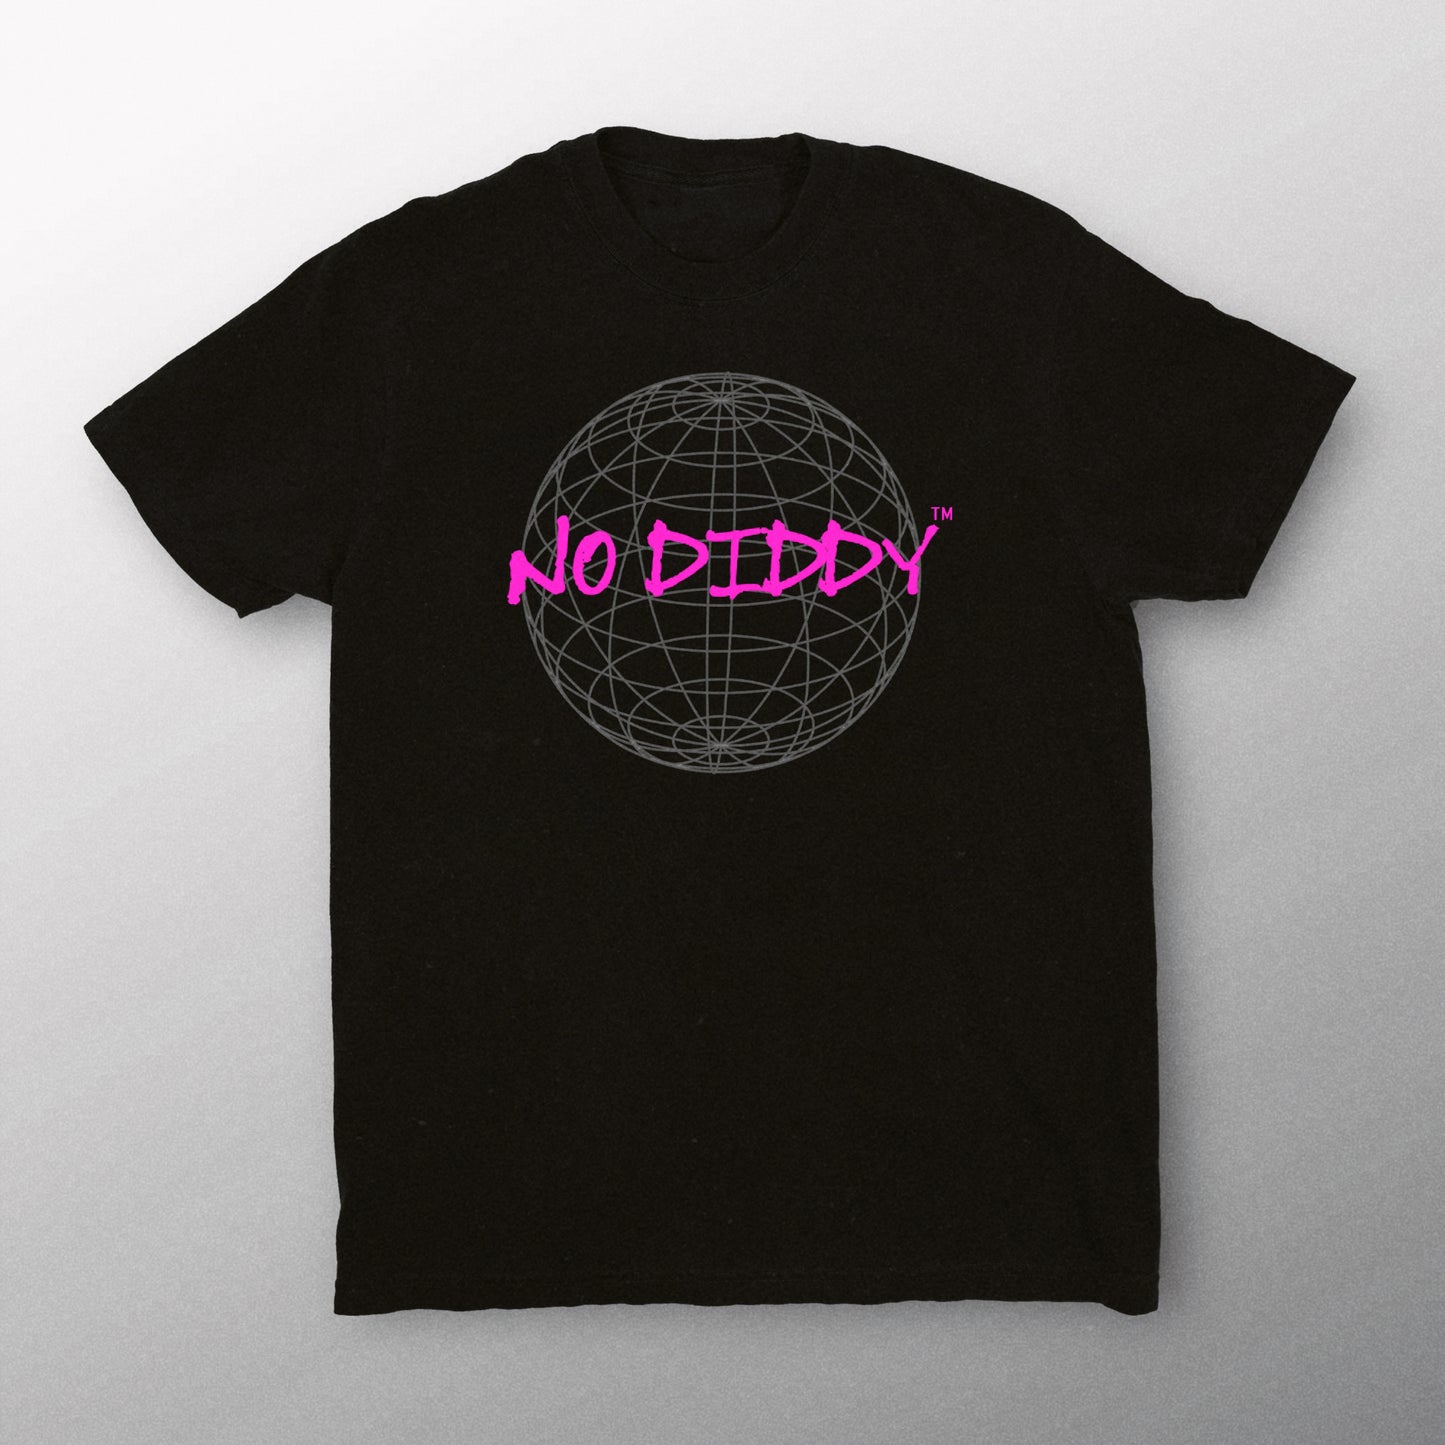 NO DIDDY “WORLDWIDE”